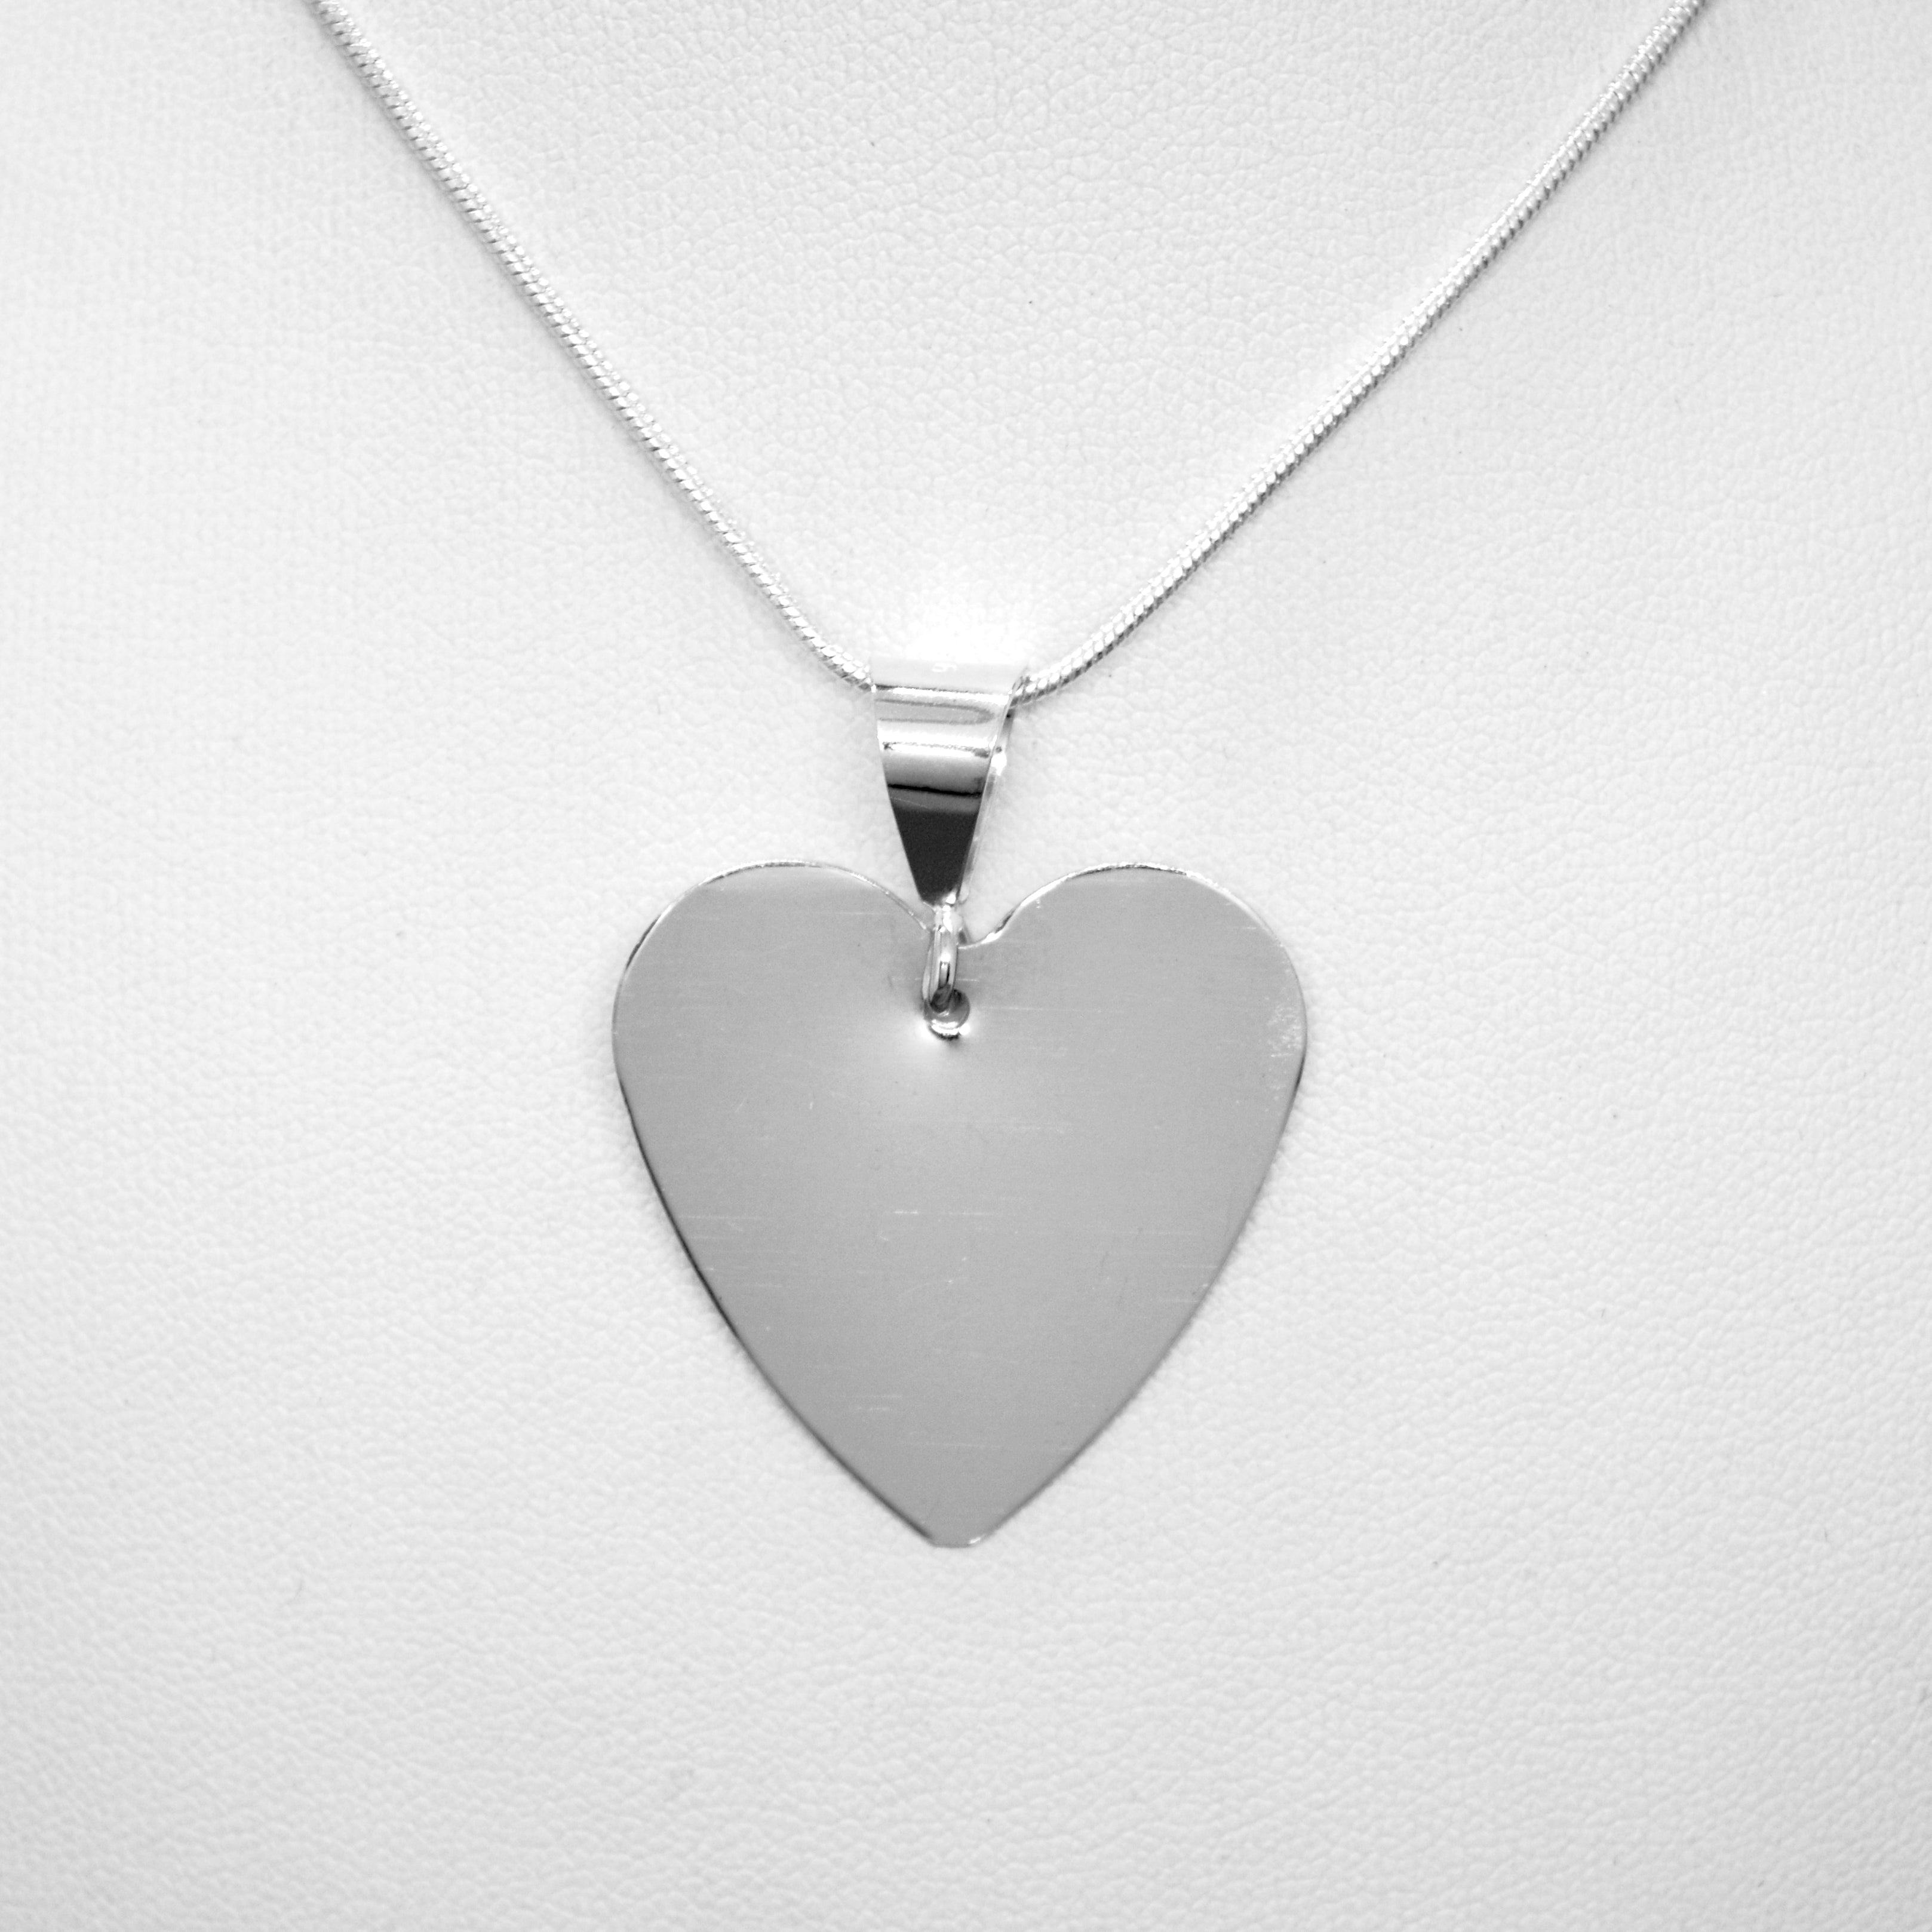 Silver Heart pendant